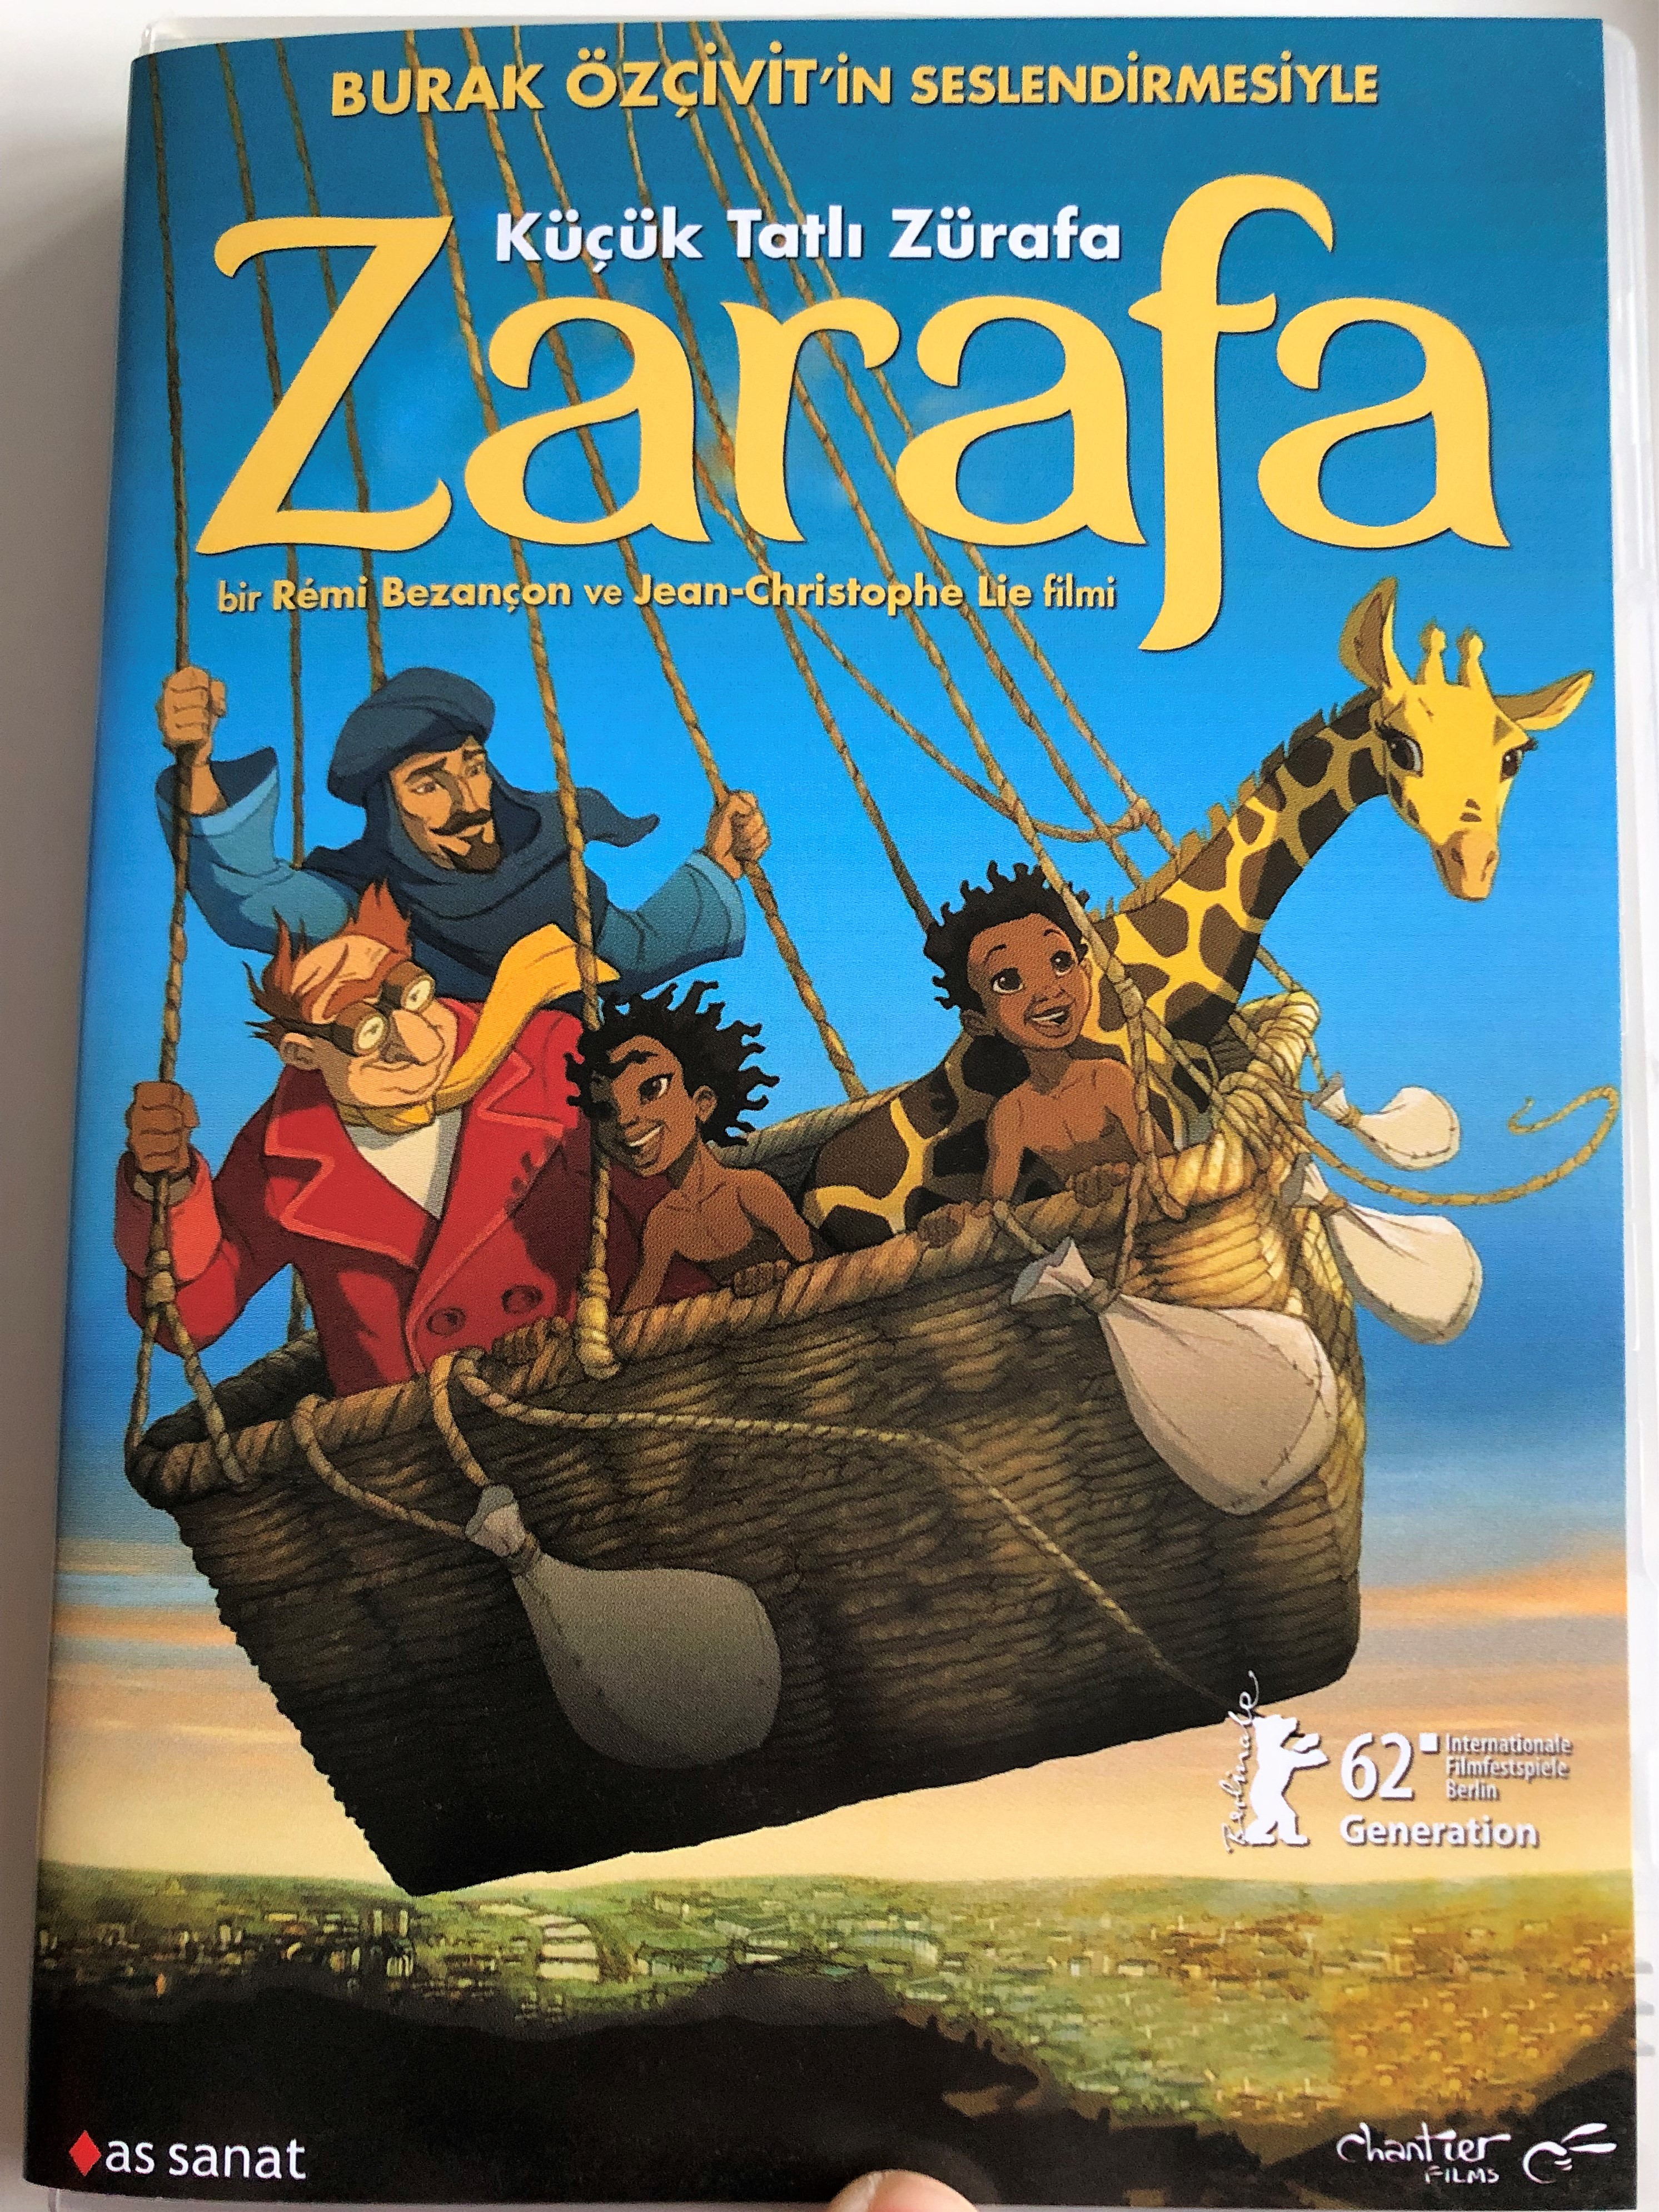 zarafa-dvd-2012-directed-by-r-mi-bezan-on-jean-christophe-lie-animated-film-1-.jpg